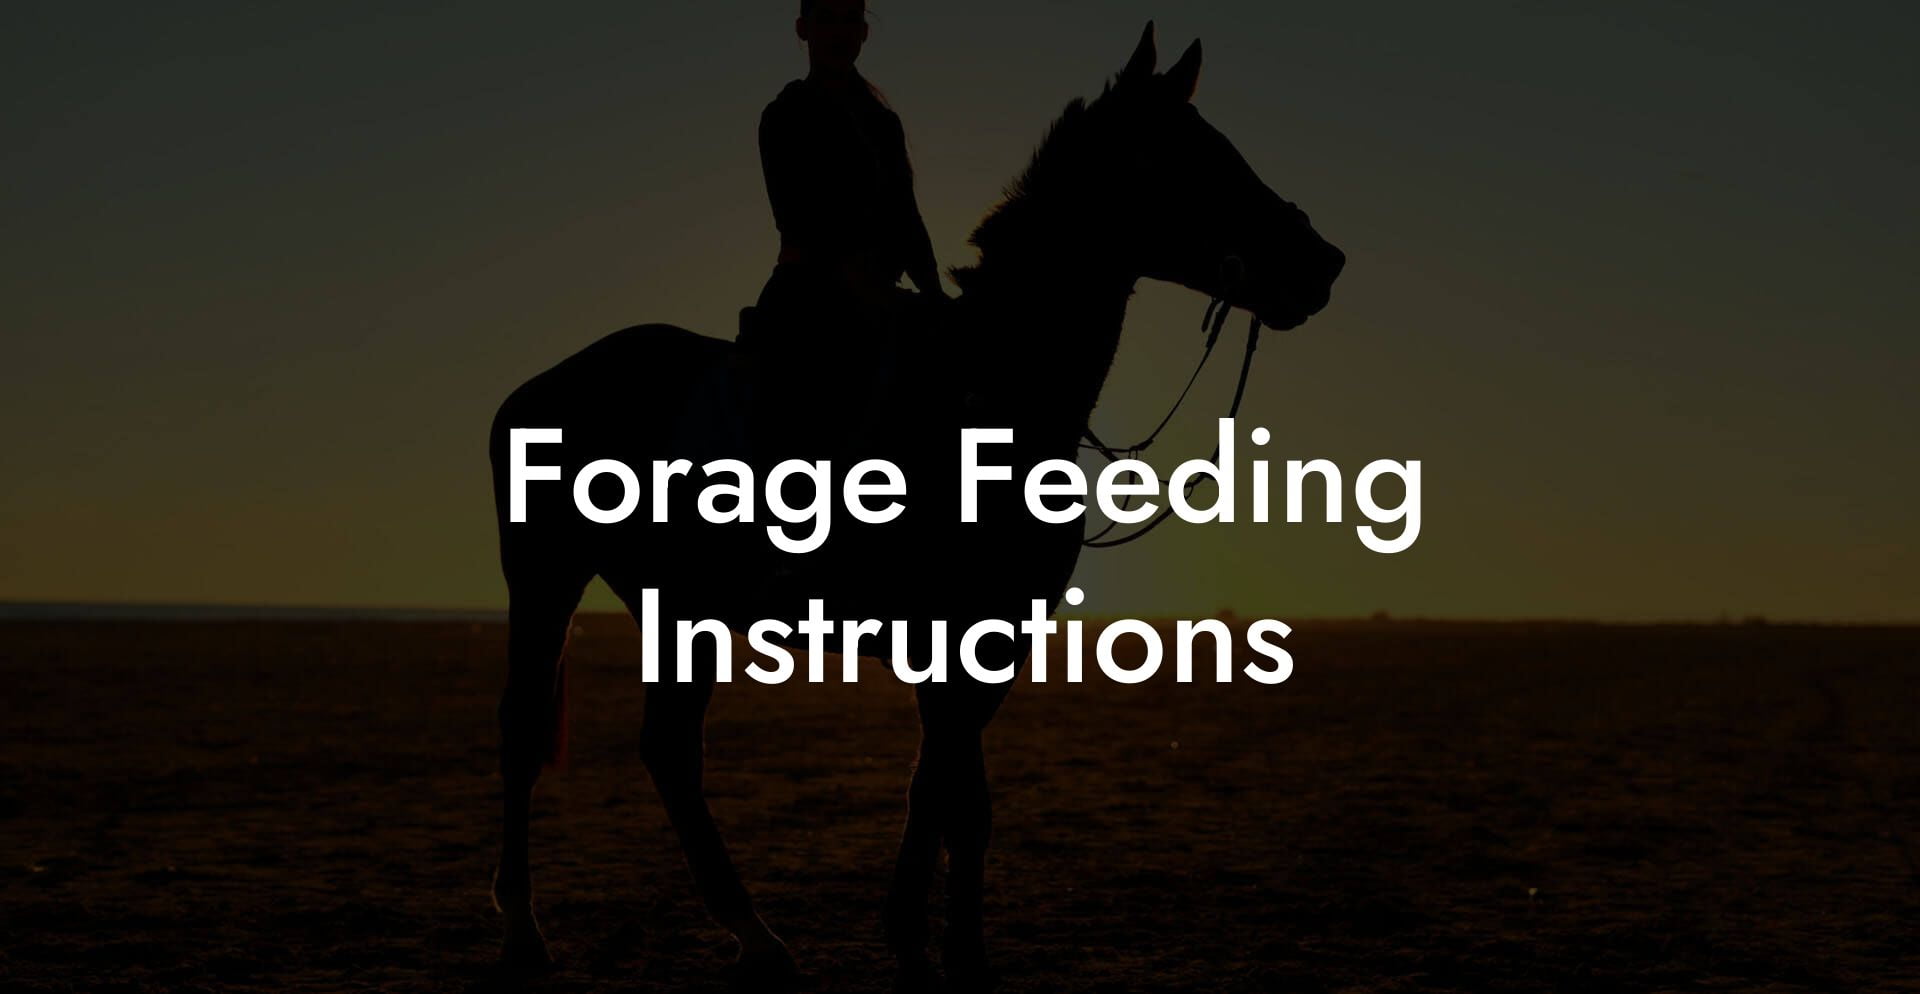 Forage Feeding Instructions